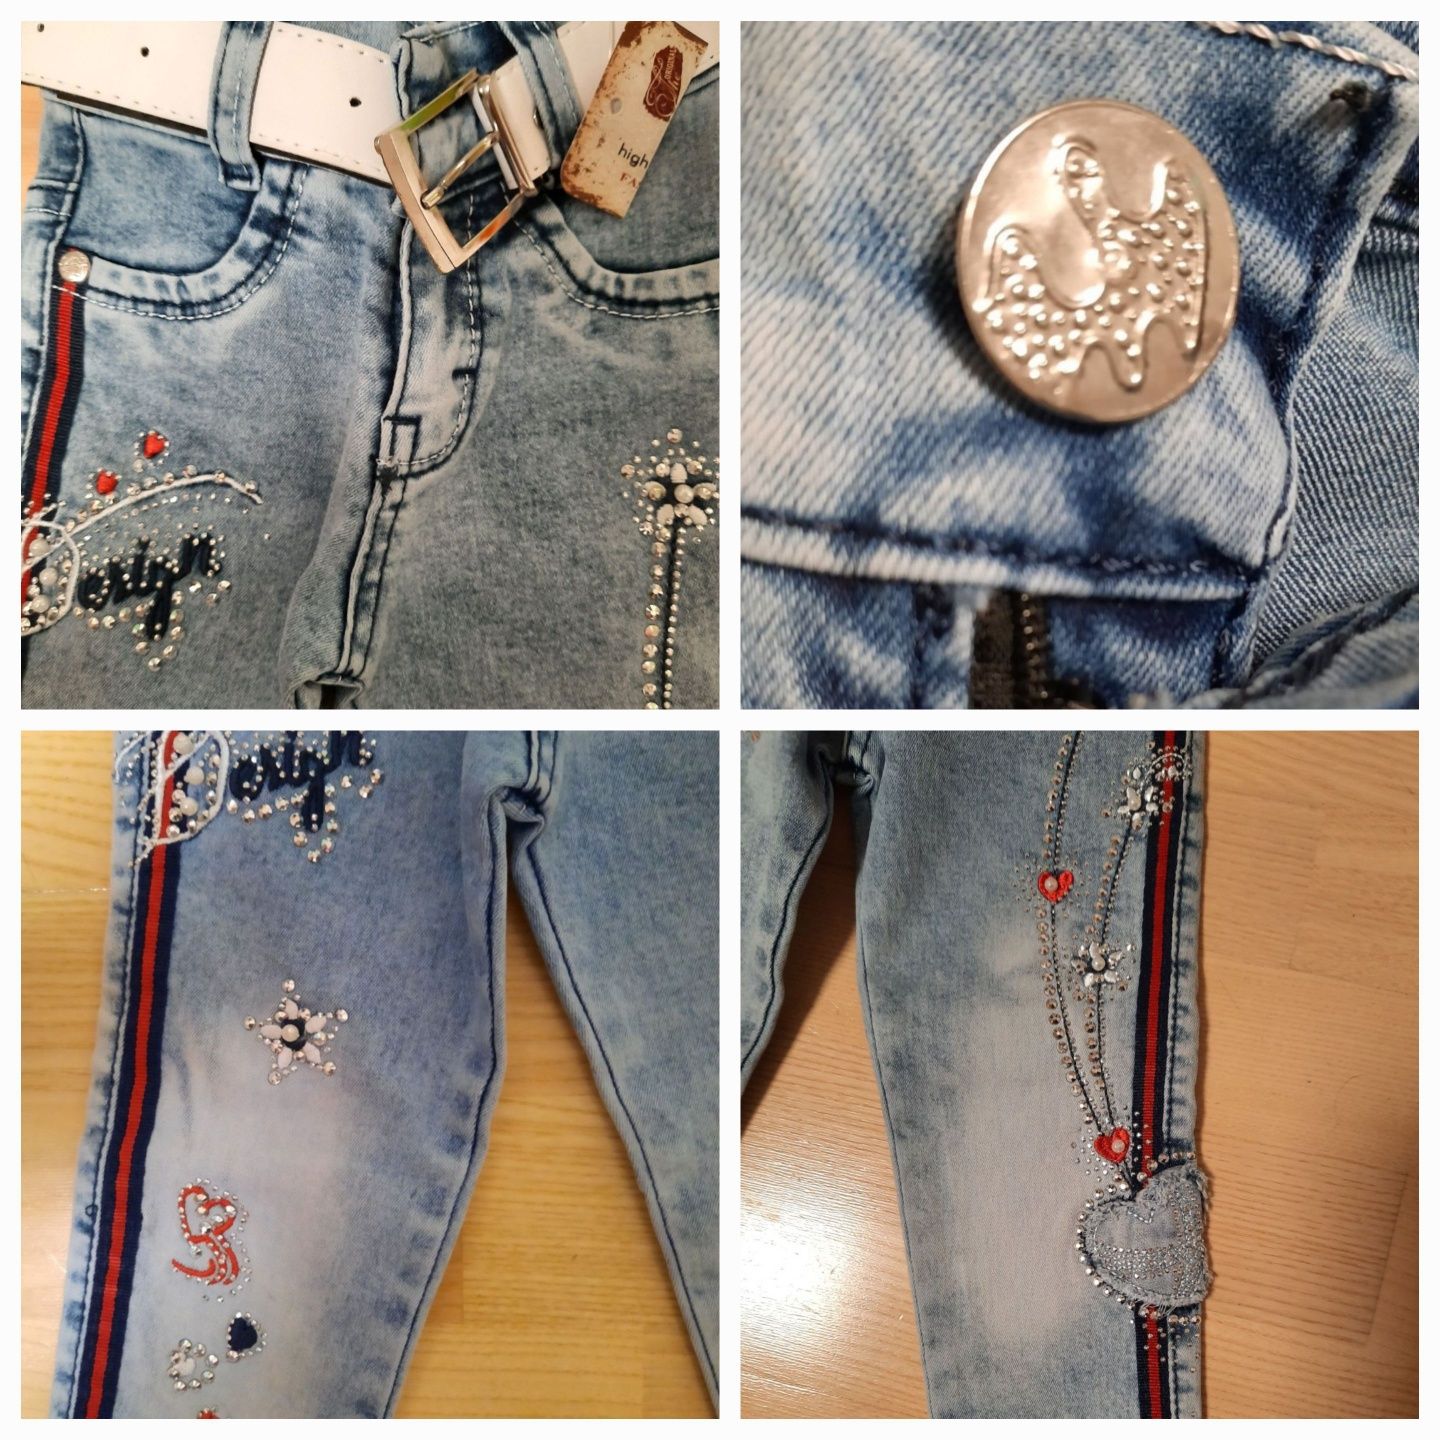 Джинсы штаны новые с этикеткой 86-92 18-24 месяца 1,5 2 года